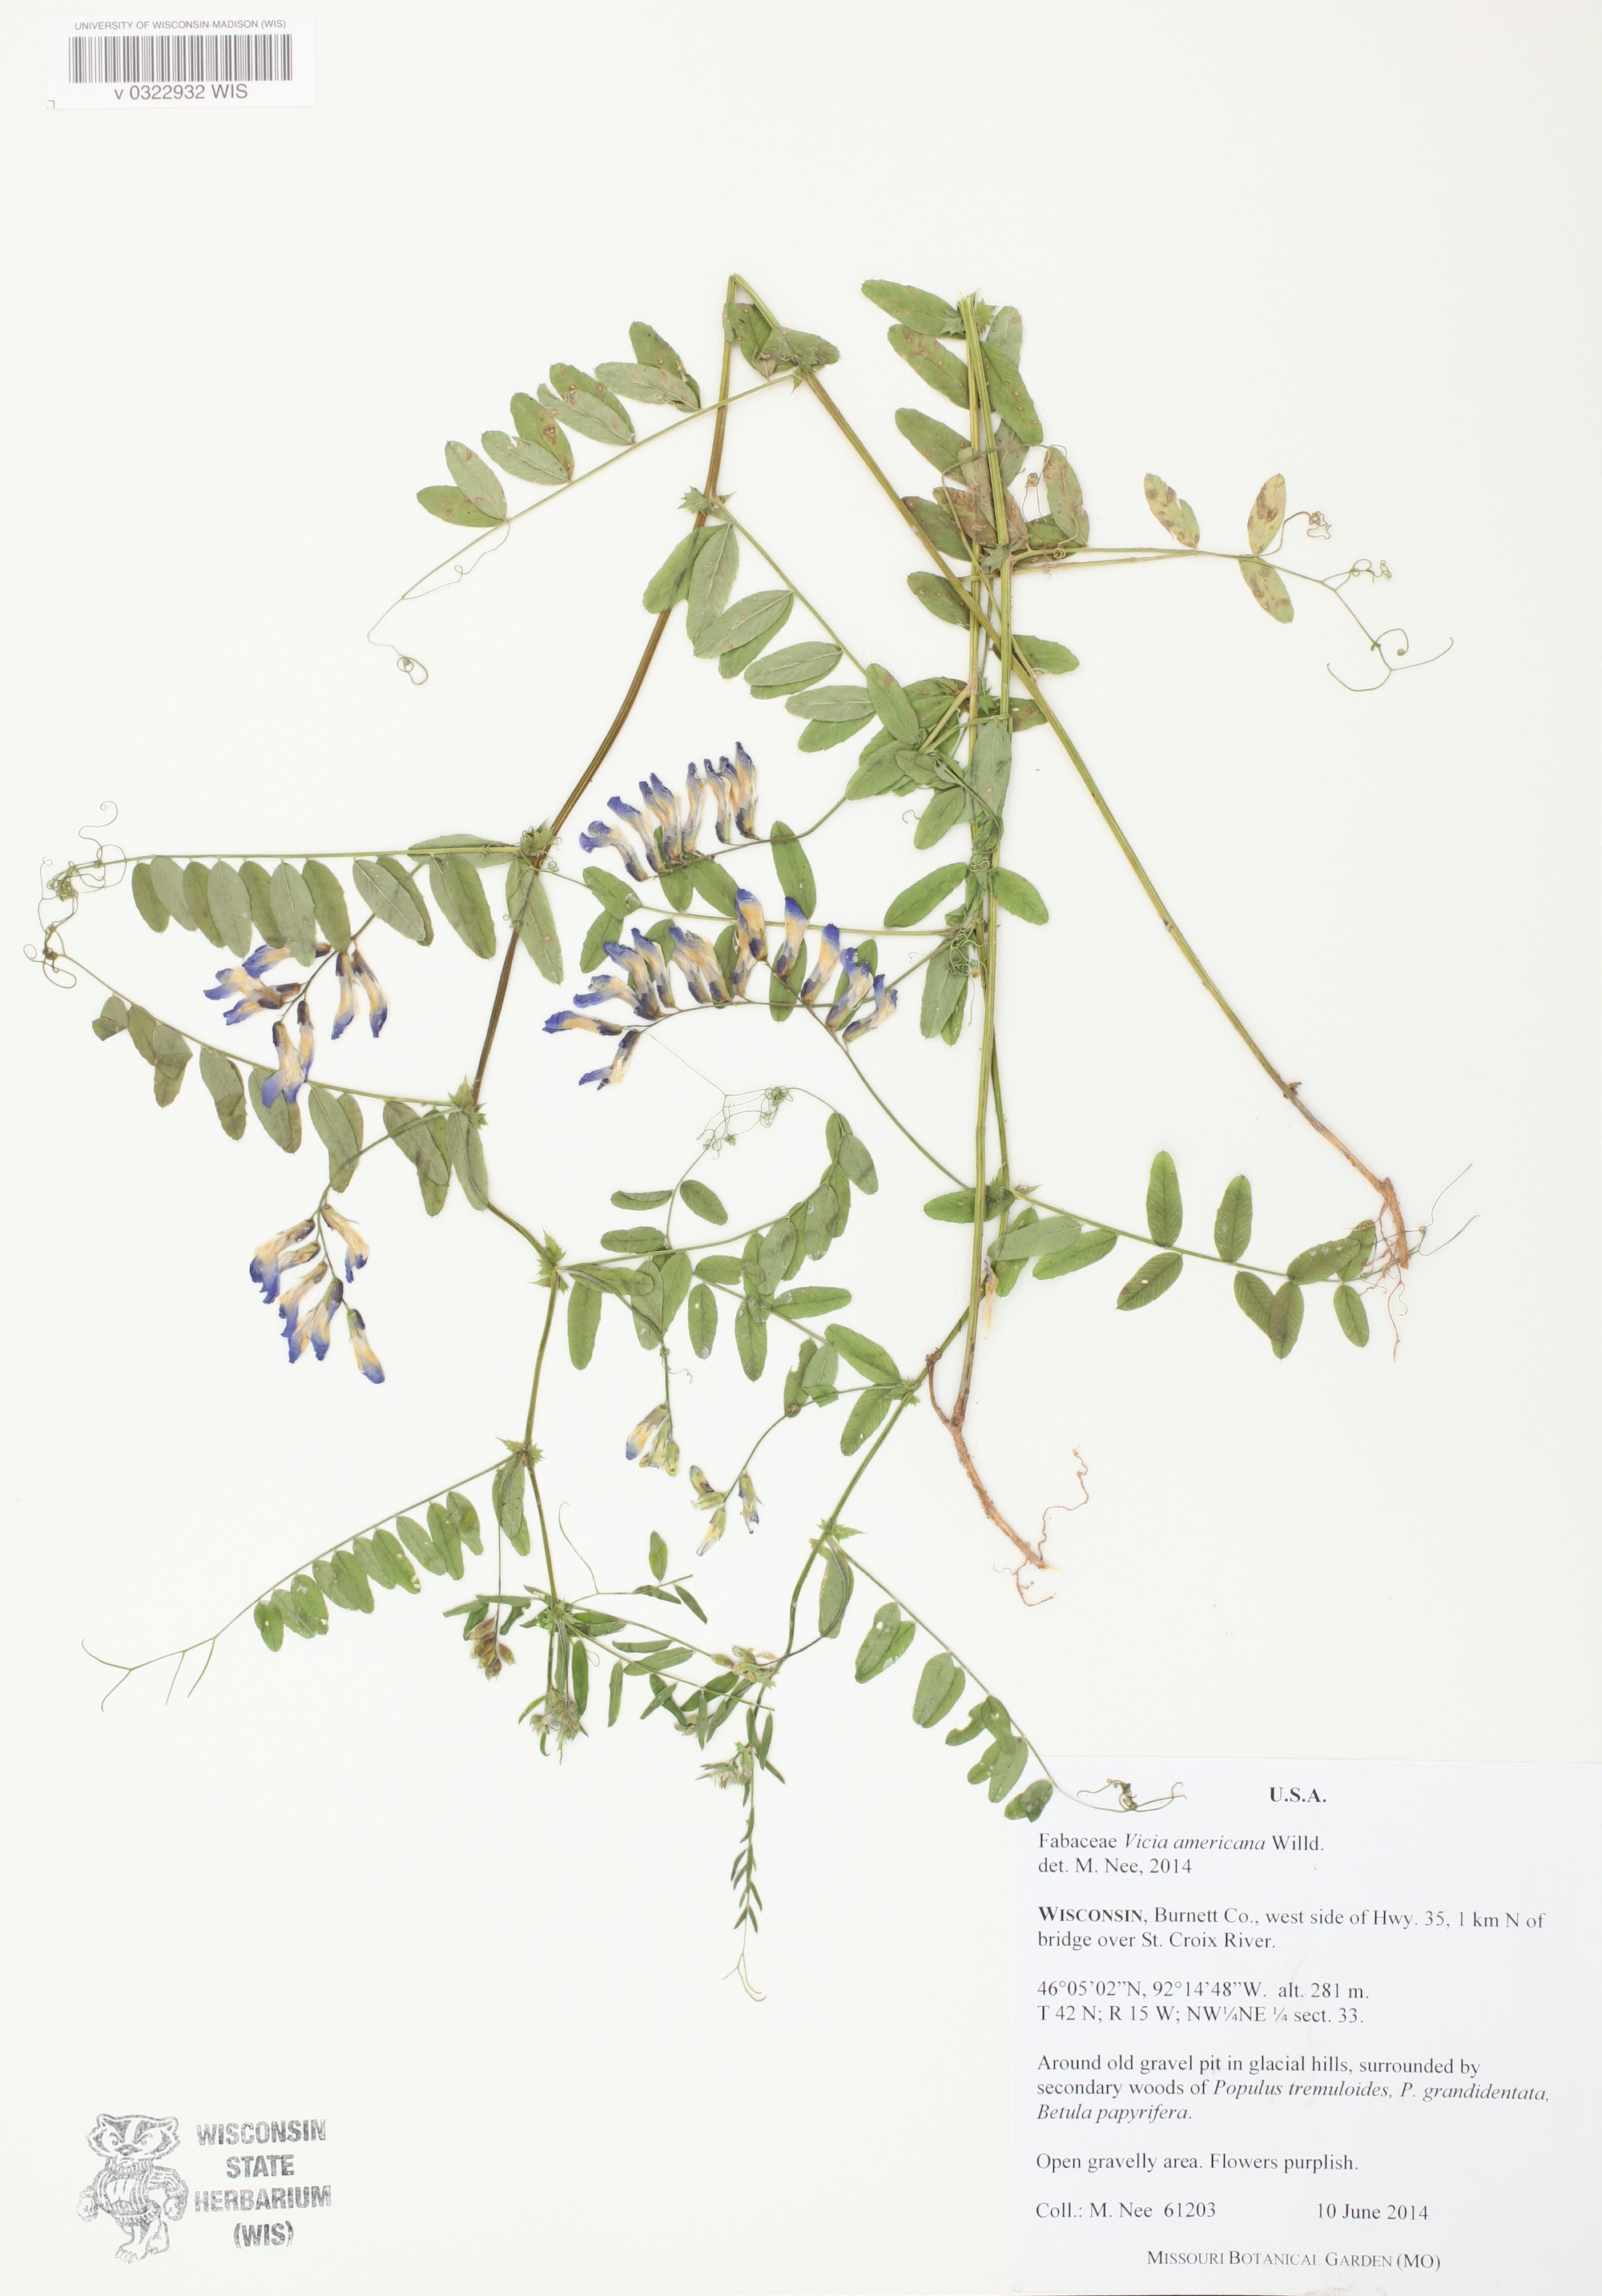 American Vetch (Vicia americana) specimen collected on Burnett, Wisconsin on June 10, 2014.